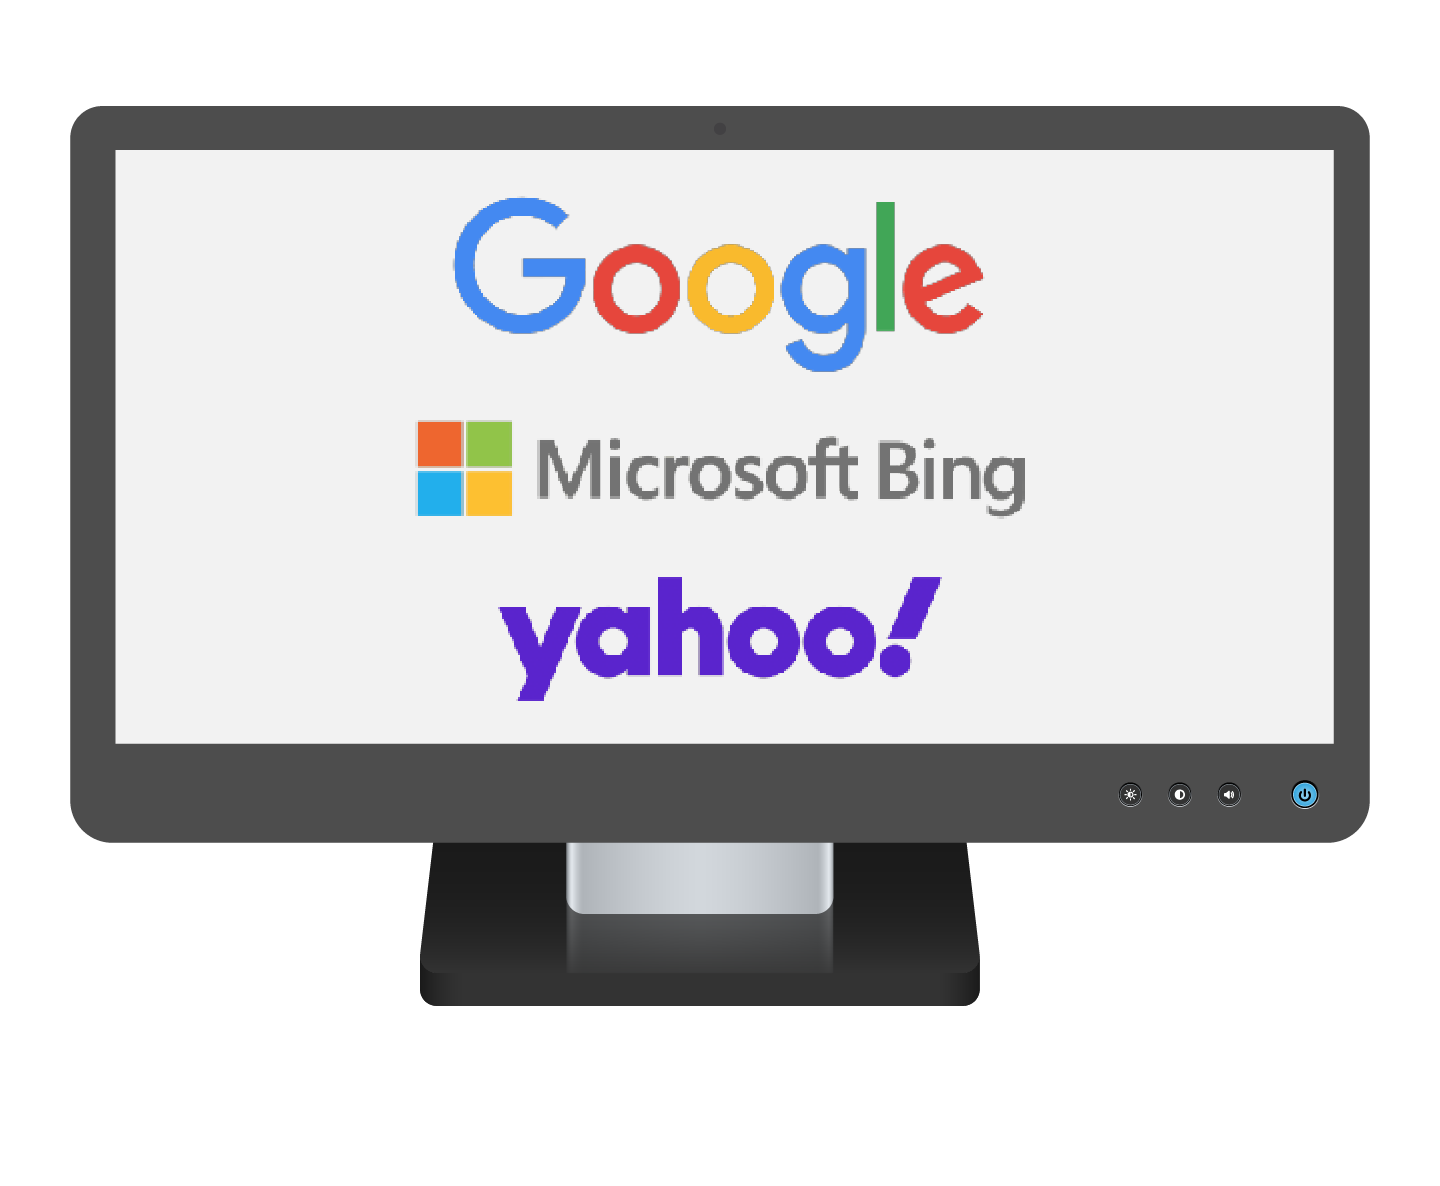 显示了Google、Microsoft Bing和Yahoo!图标的台式机电脑